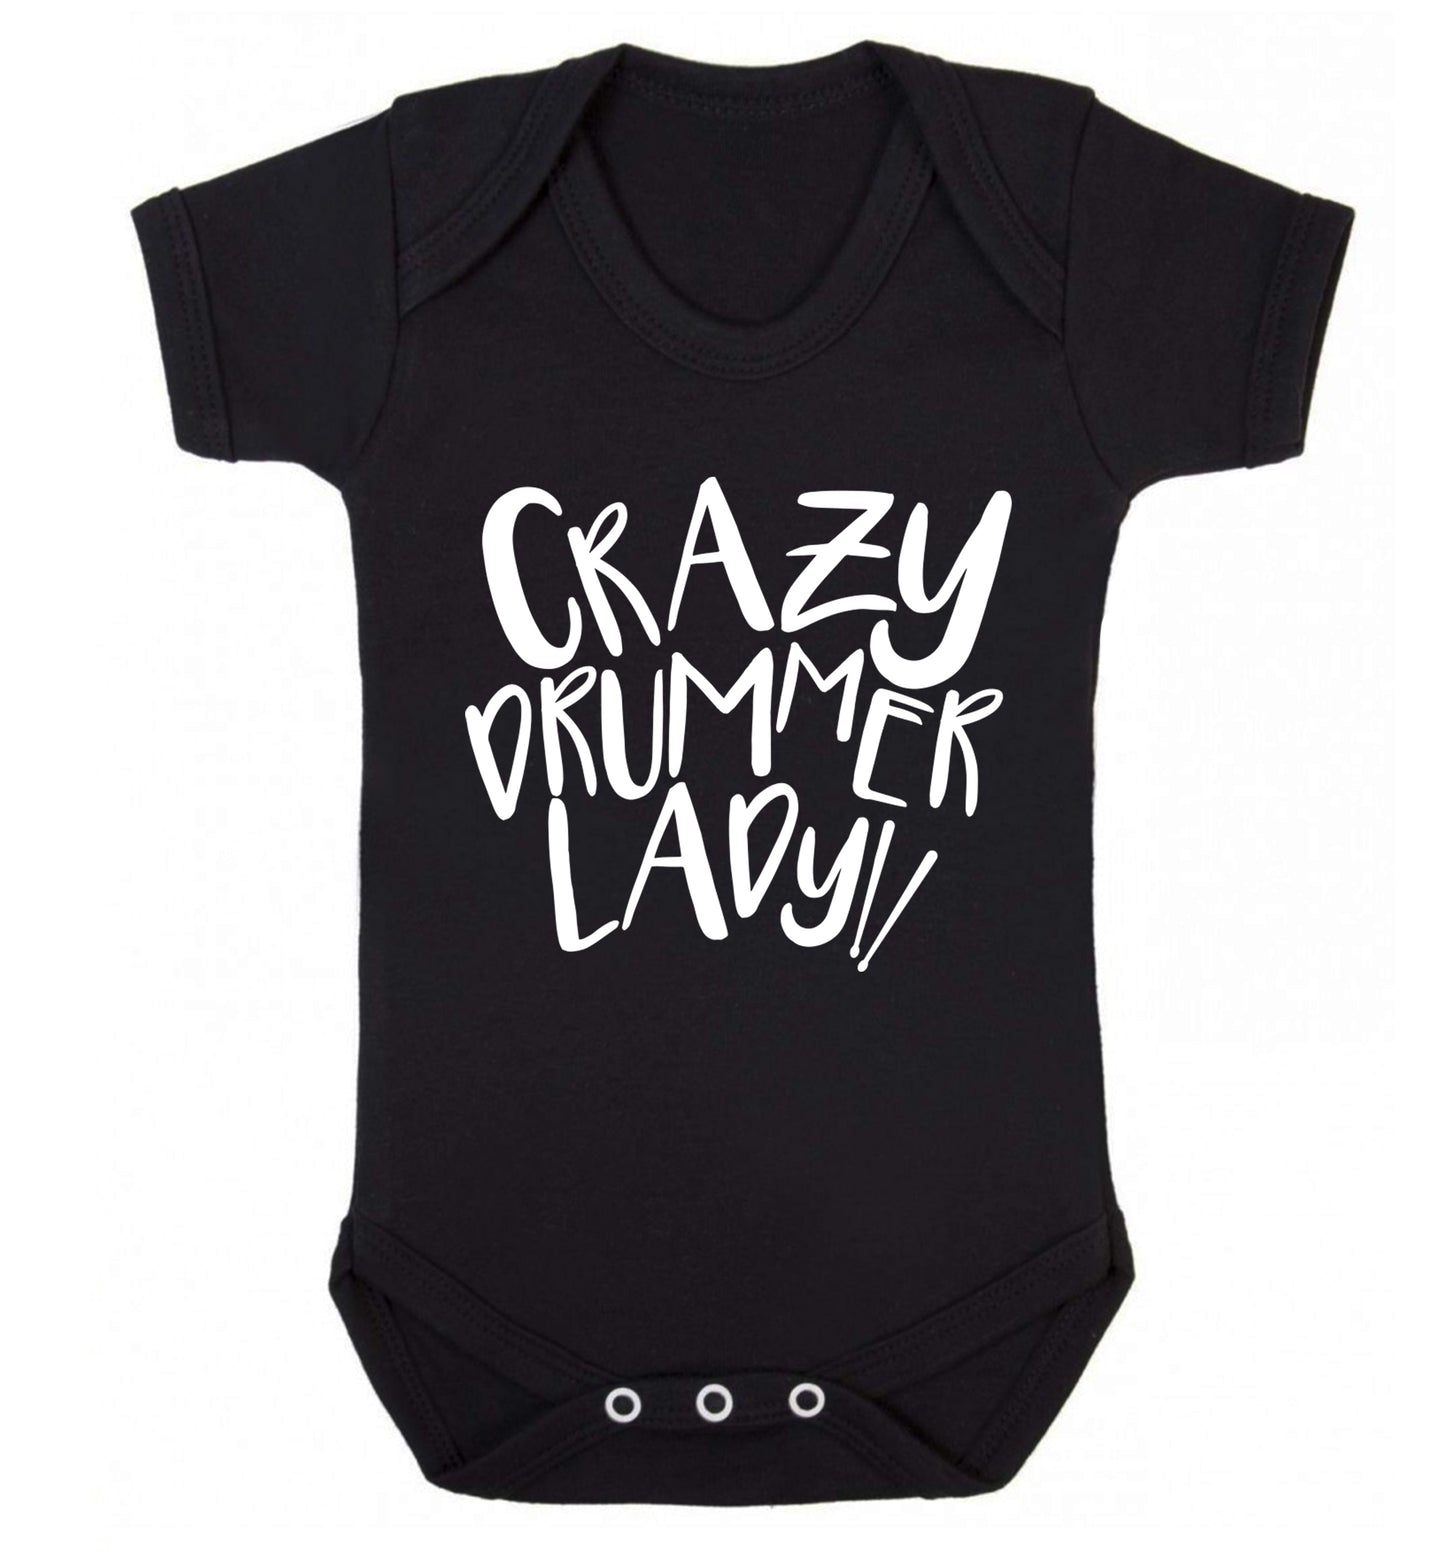 Crazy drummer lady Baby Vest black 18-24 months